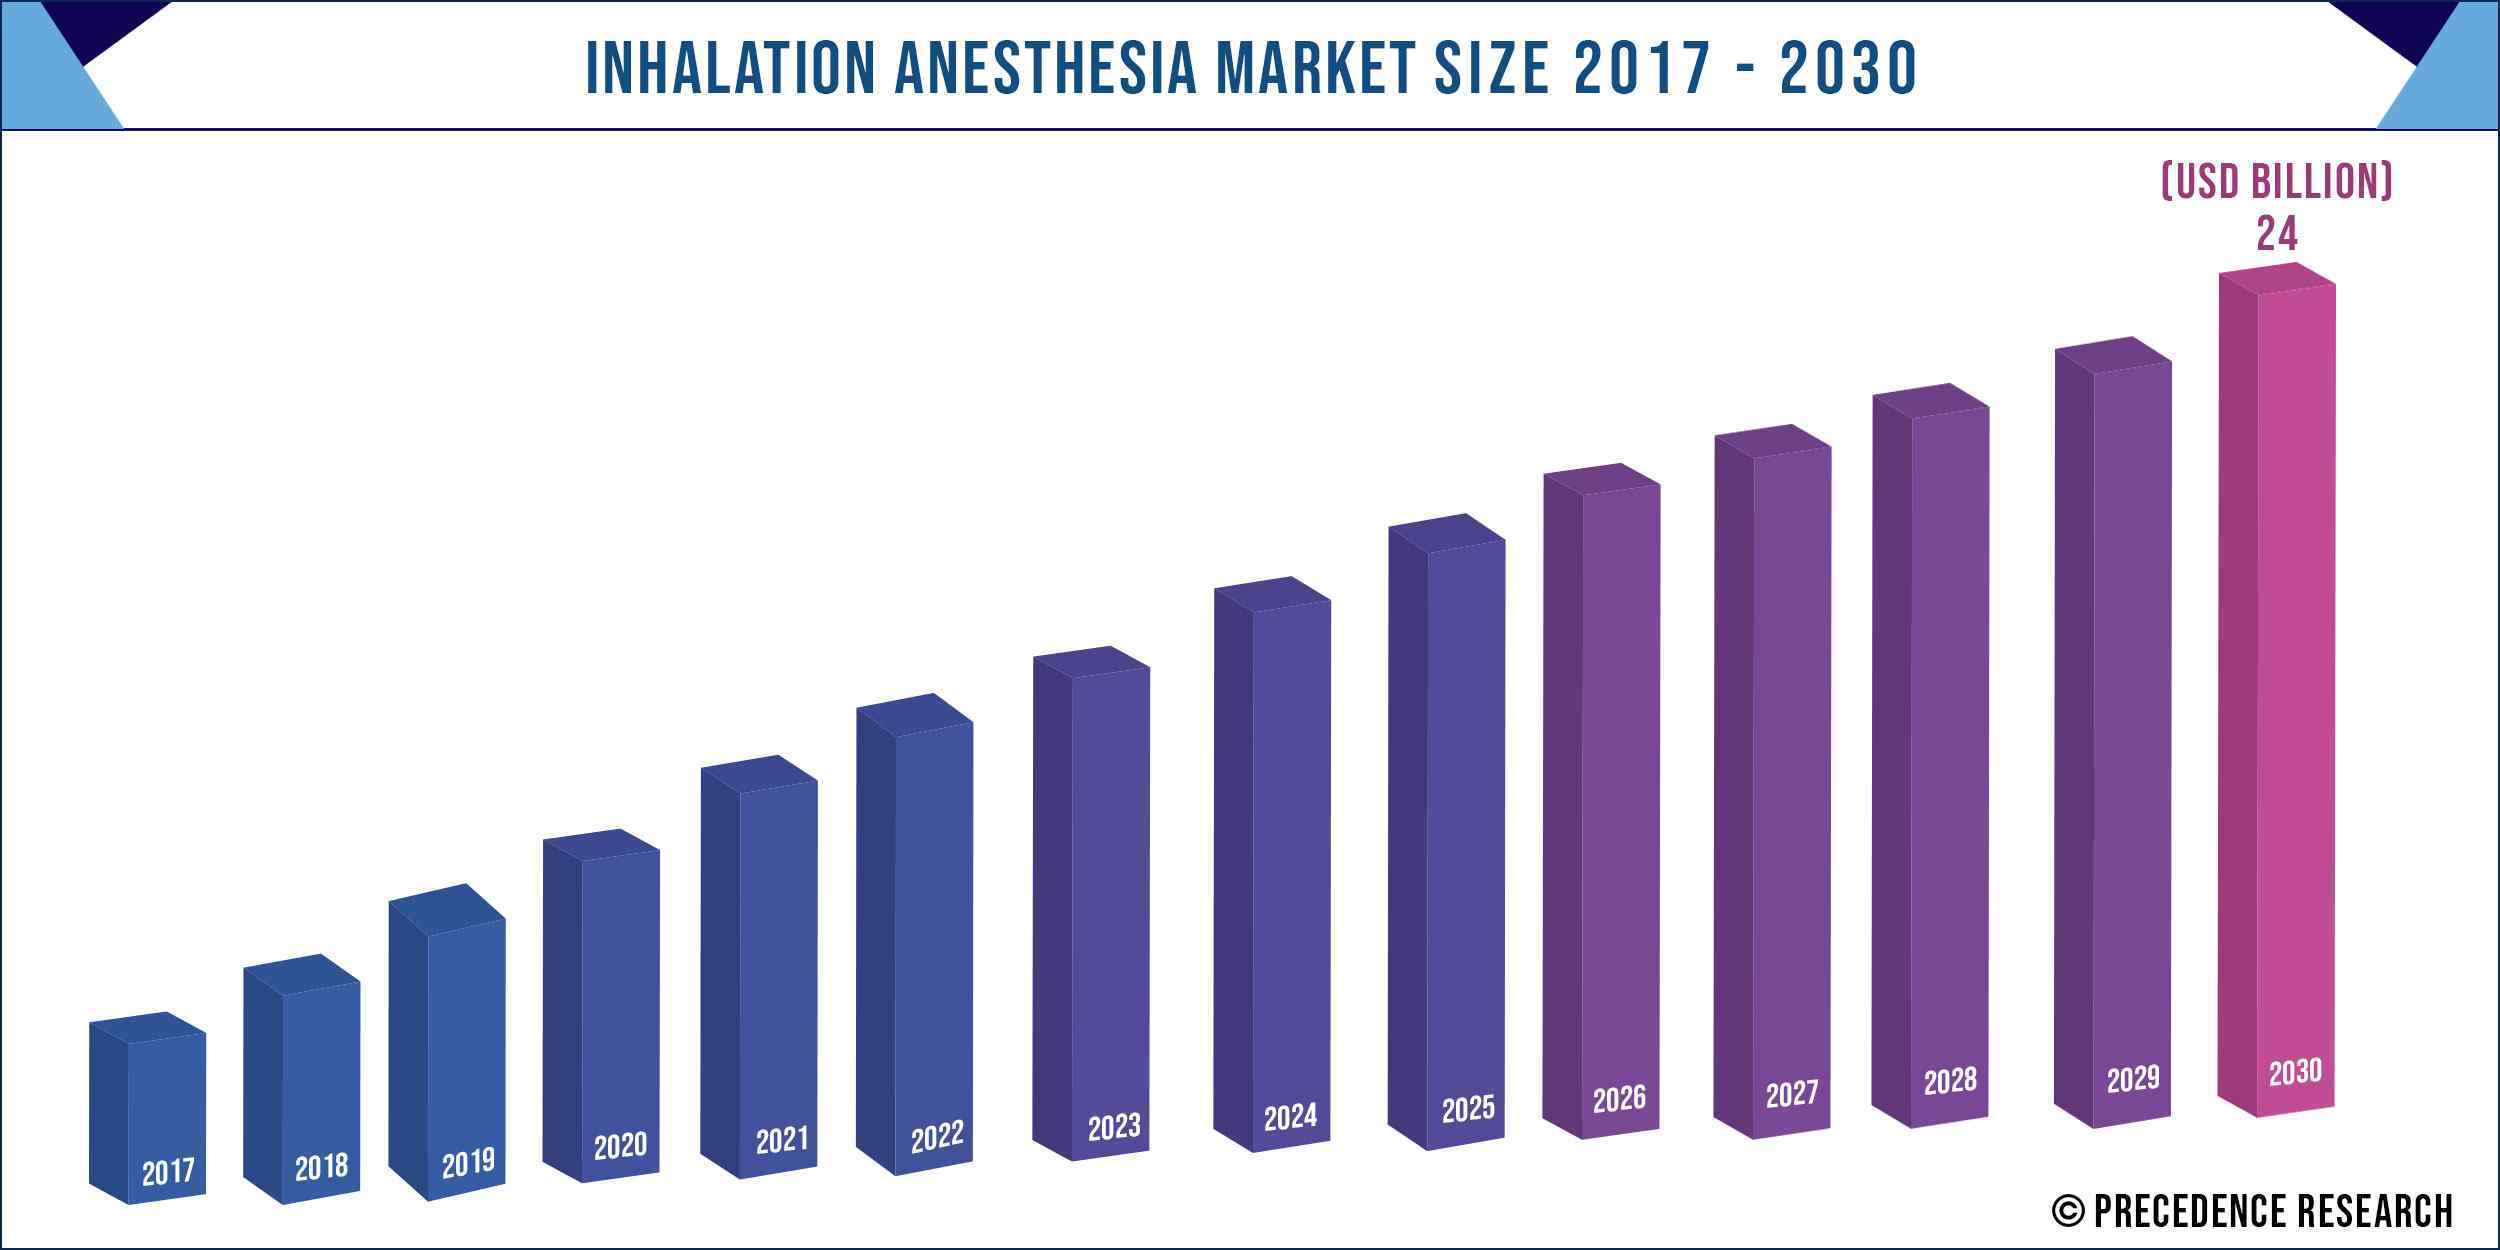 Inhalation Anesthesia Market Size 2017-2030